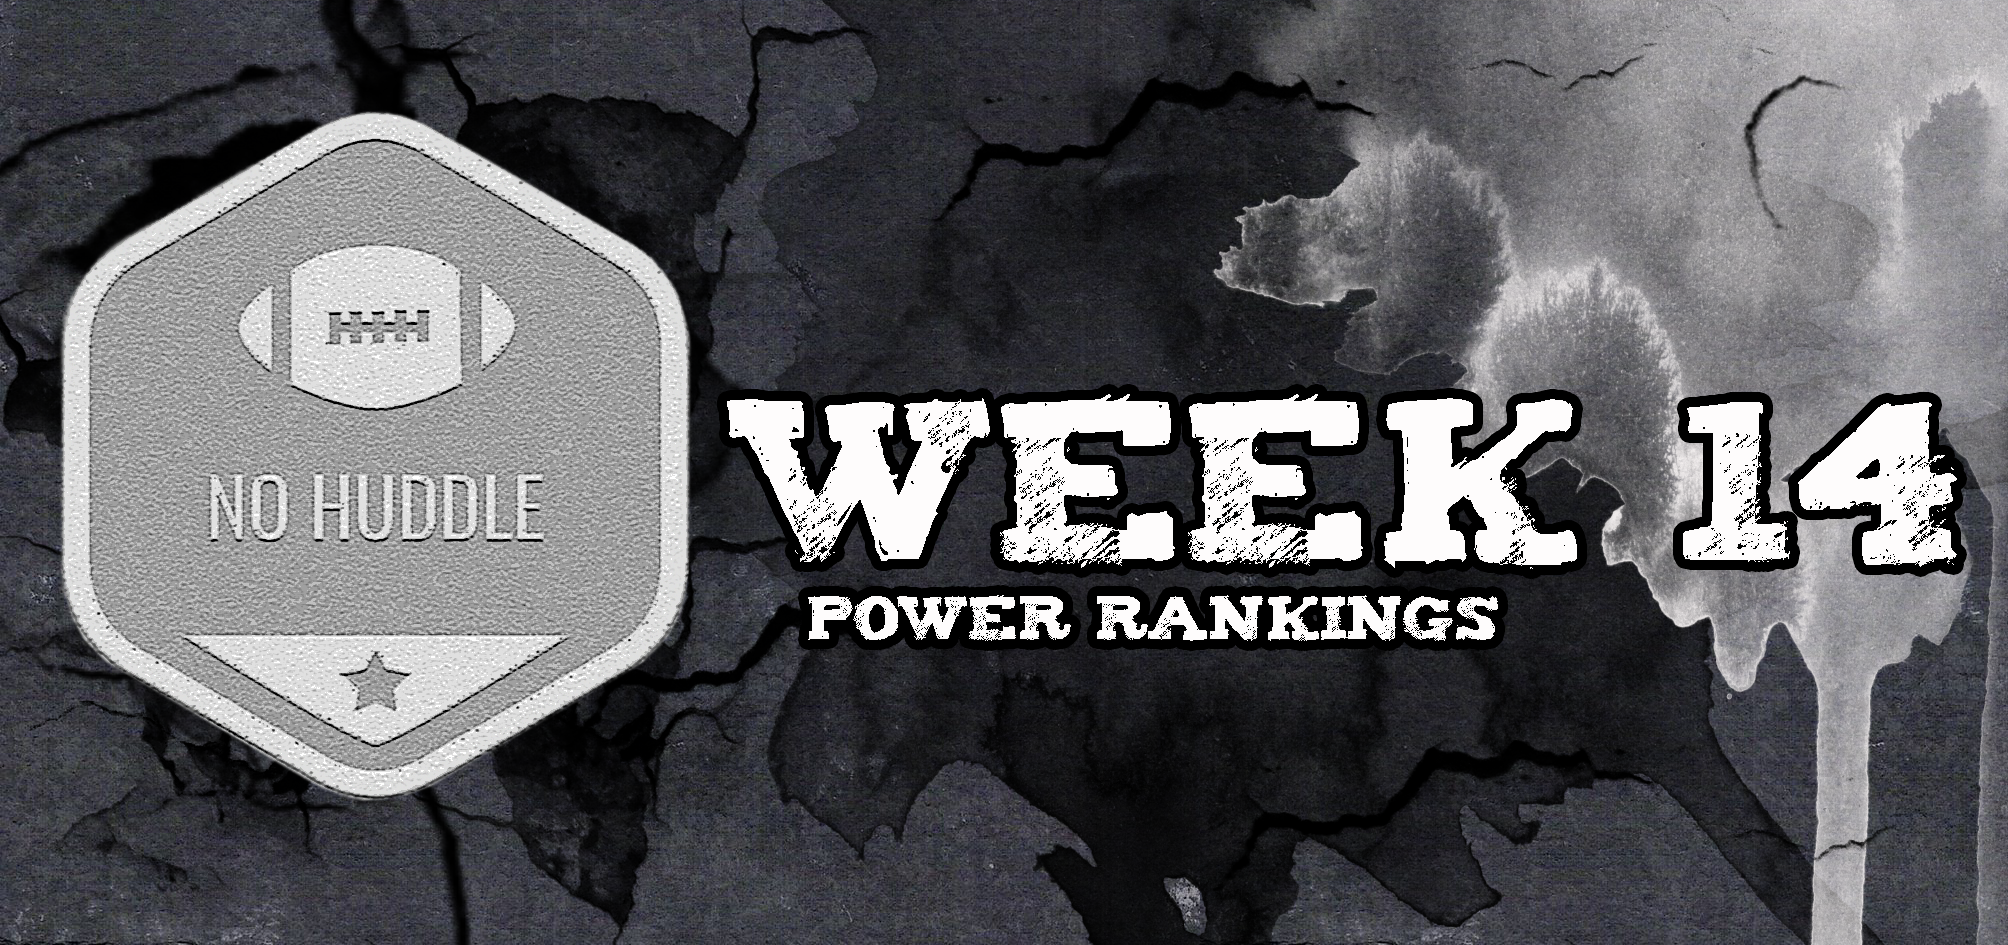 Power Rankings: Semana 14